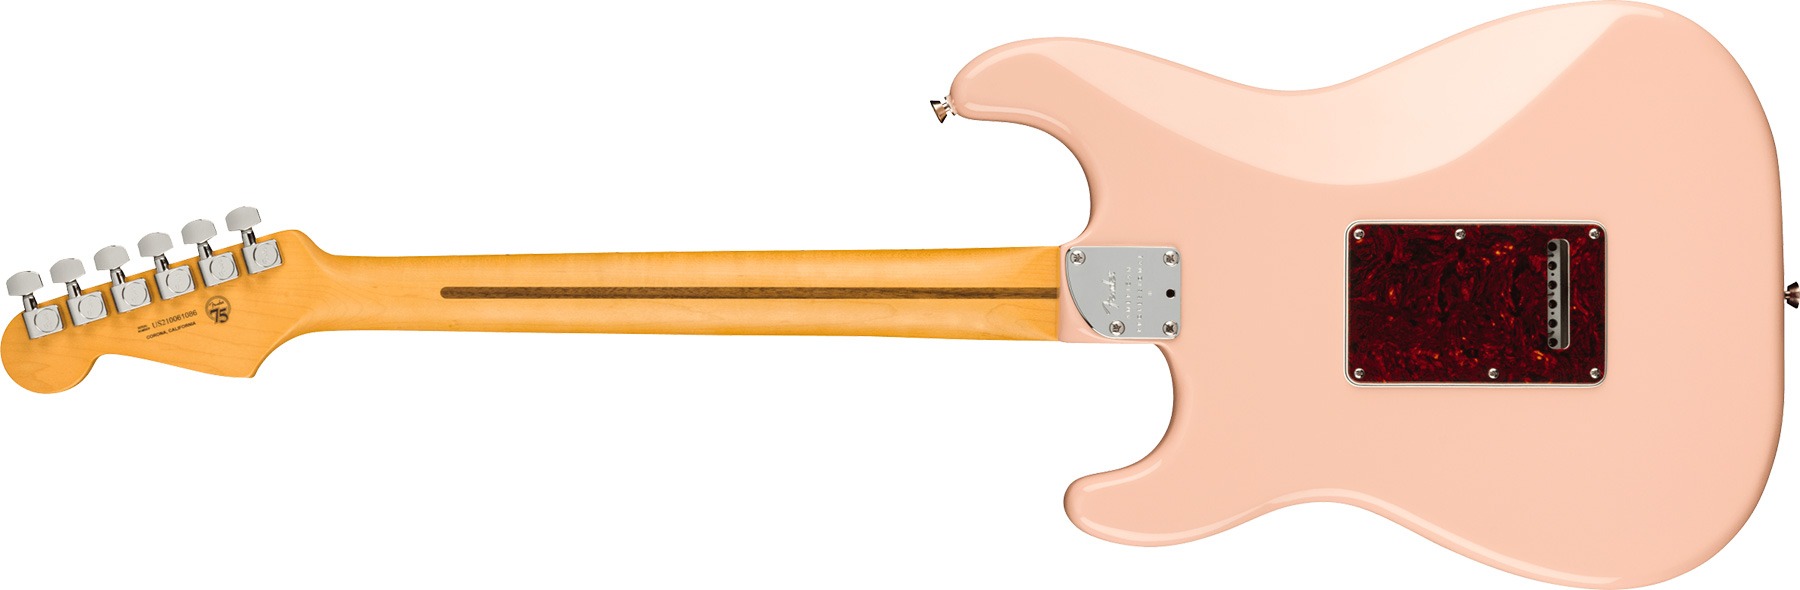 Fender Strat American Pro Ii Ltd Hss Trem Mn - Shell Pink - Guitarra eléctrica con forma de str. - Variation 1